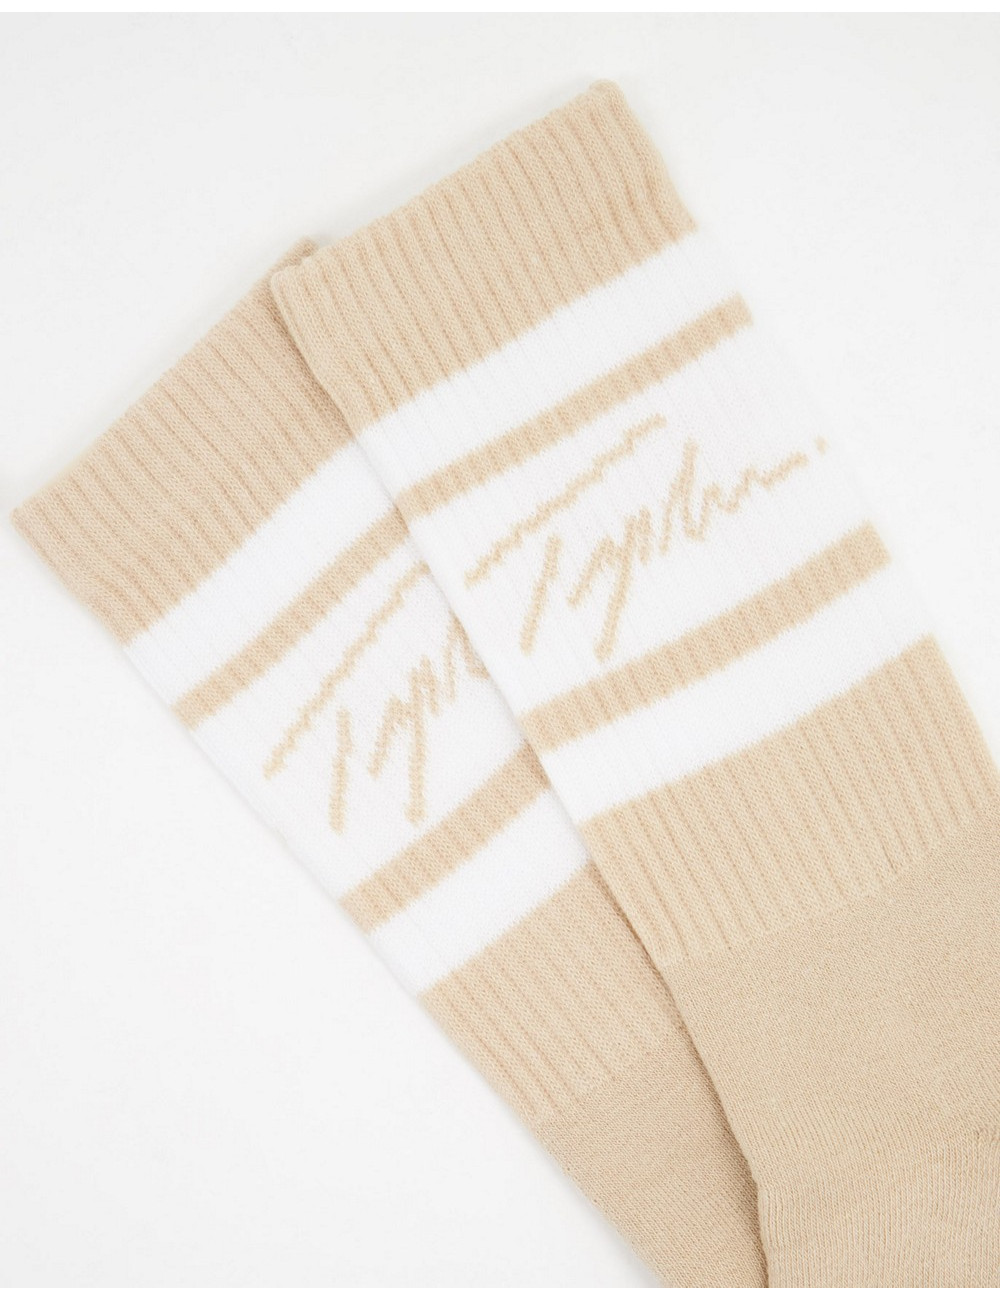 Topman Signature tube sock...